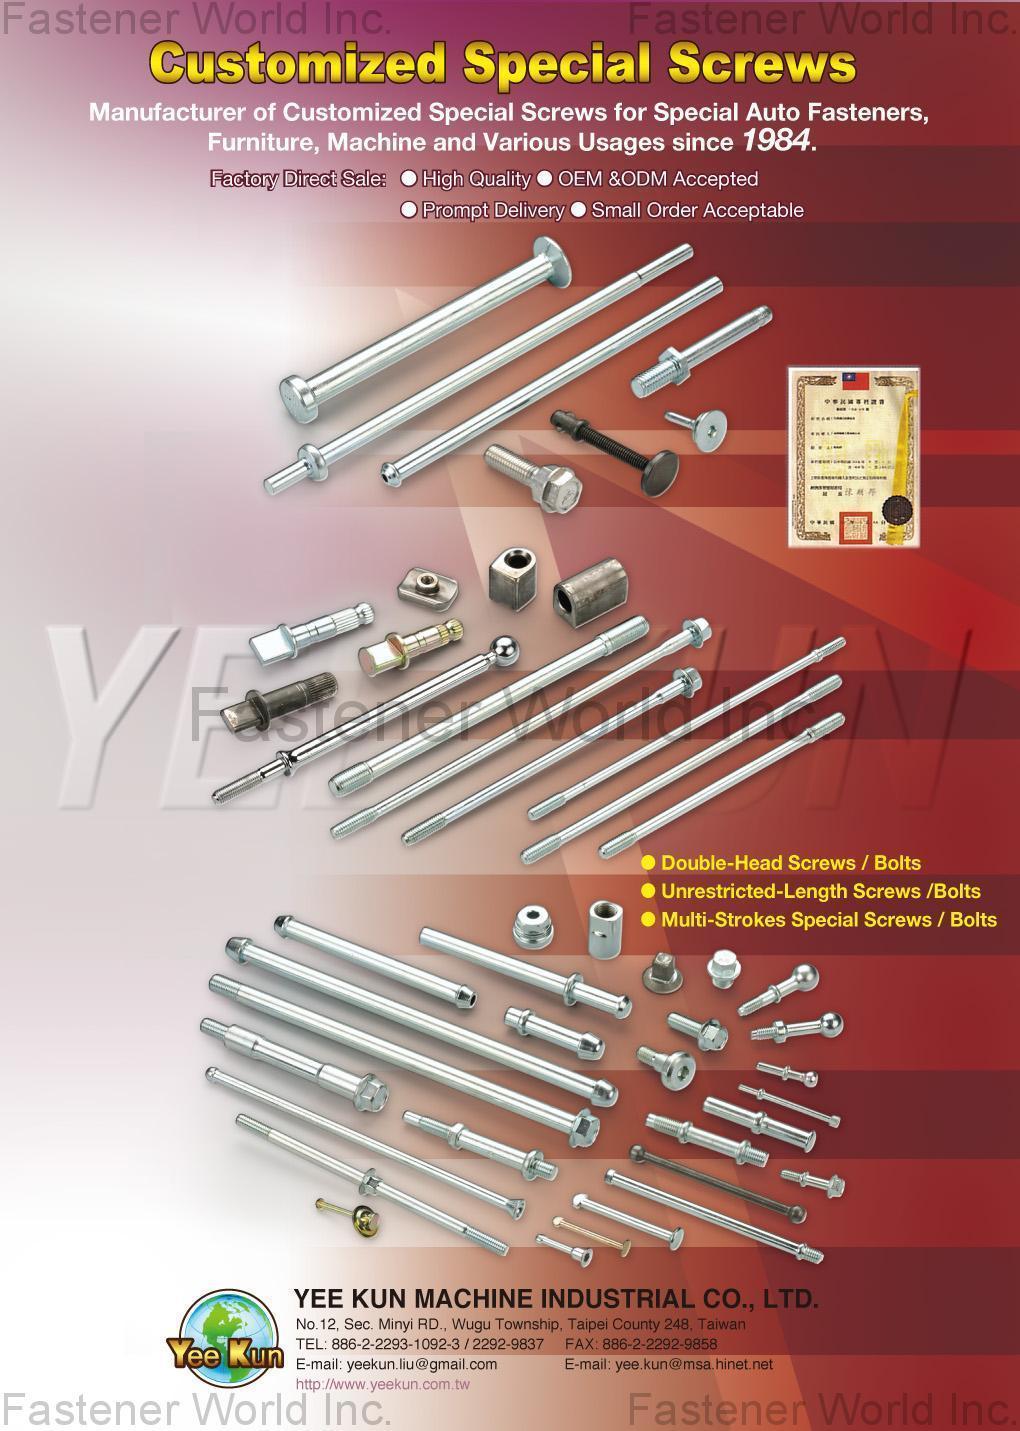 YEE KUN MACHINE INDUSTRIAL CO., LTD. , Double-Head Screws / Bolts, Unrestricted-Length Screws / Bolts, Multi-Strokes Special Screws / Bolts , Special Screws